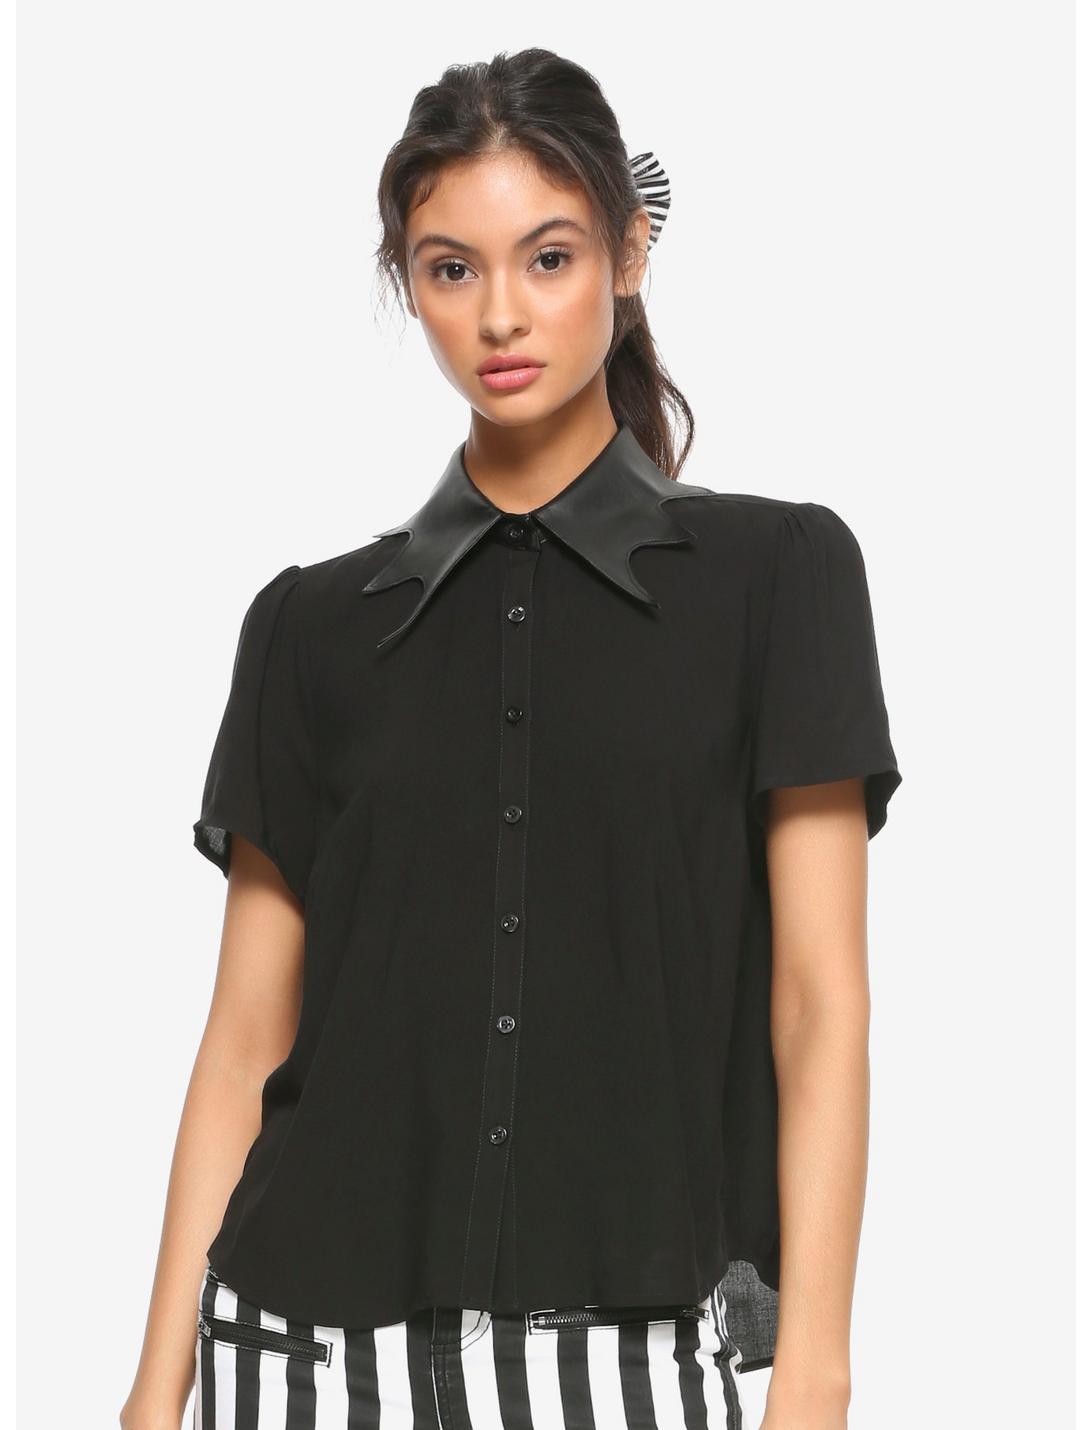 Black Bat Collar Girls Button-Up Shirt, BLACK, hi-res